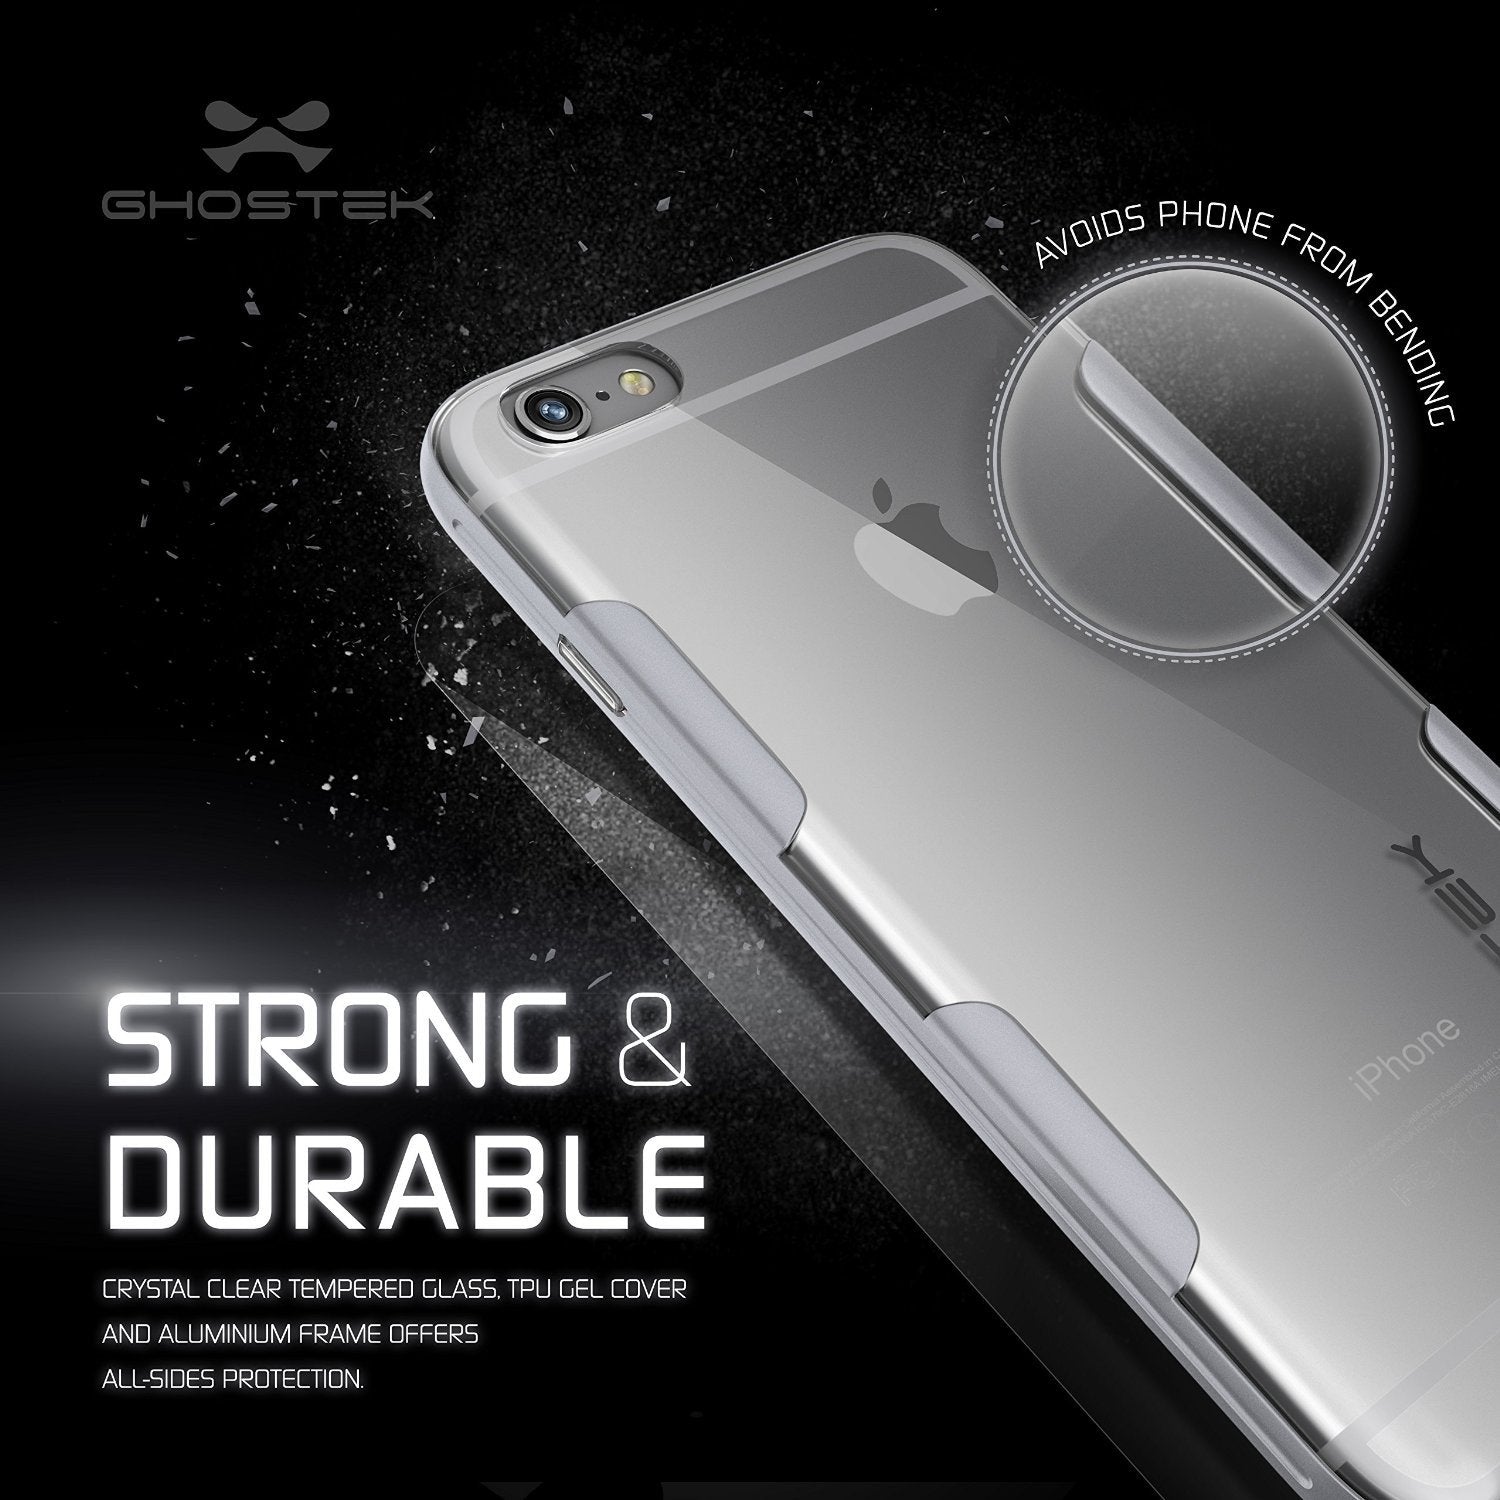 iPhone 6s Plus Case Silver Ghostek Cloak, Slim Protective w/ Tempered Glass | Lifetime Warranty